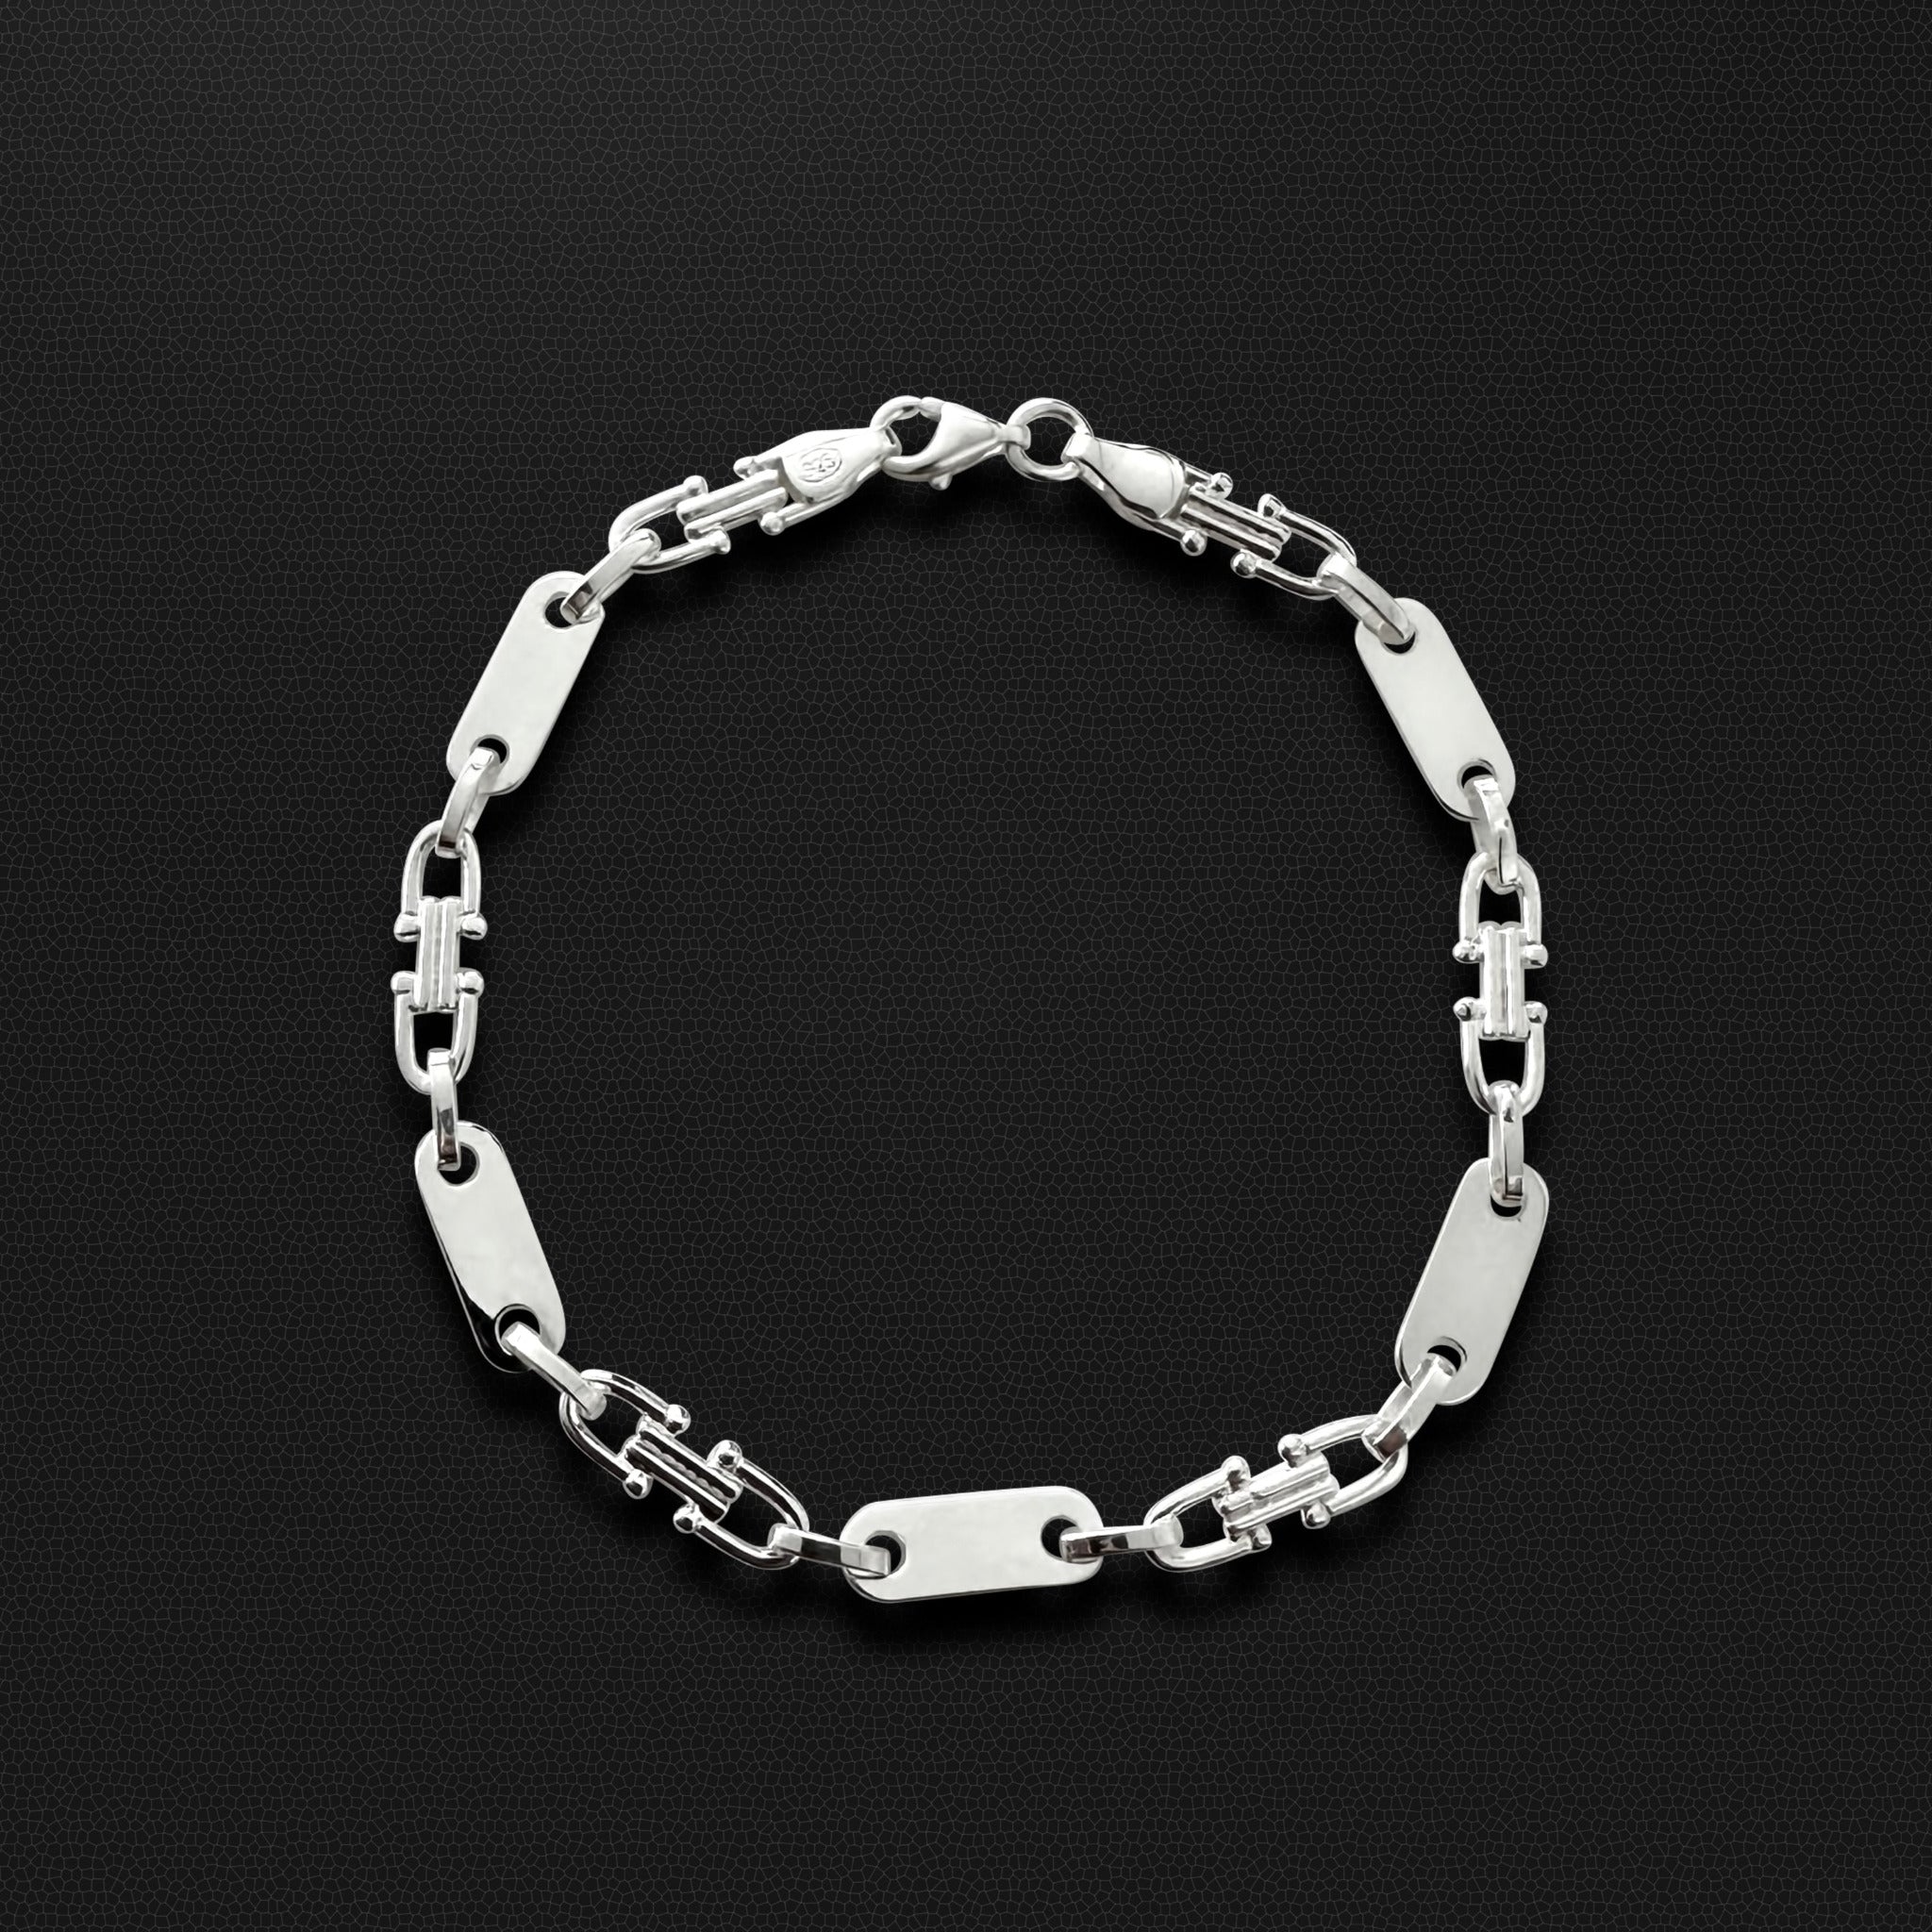 Plate Chain Silver with bracelet / Platten Kette Silber mit